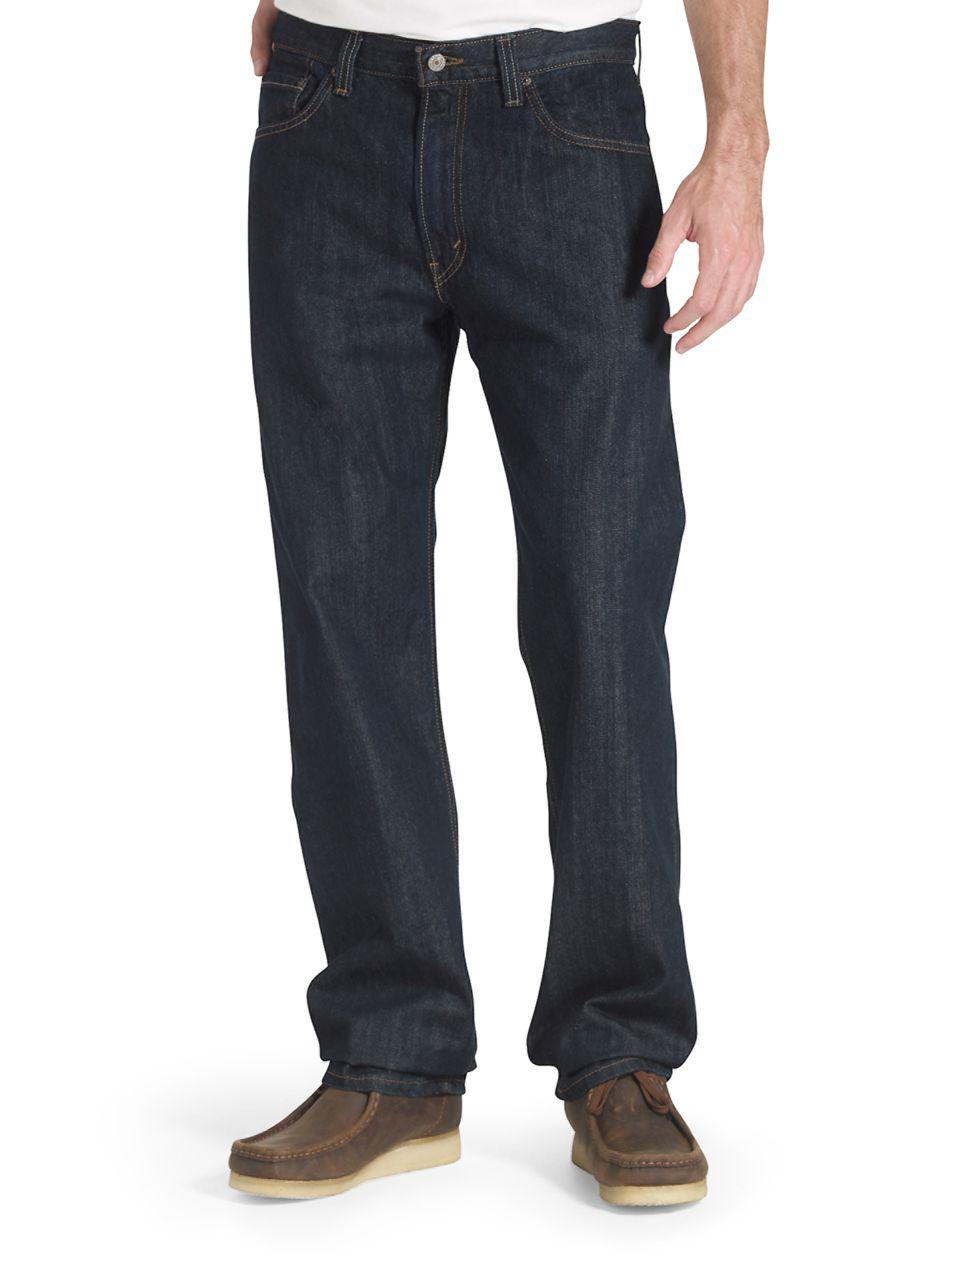 Lyst - Levi'S 505 Regular Fit Tumbled Rigid Jeans in Blue for Men ...